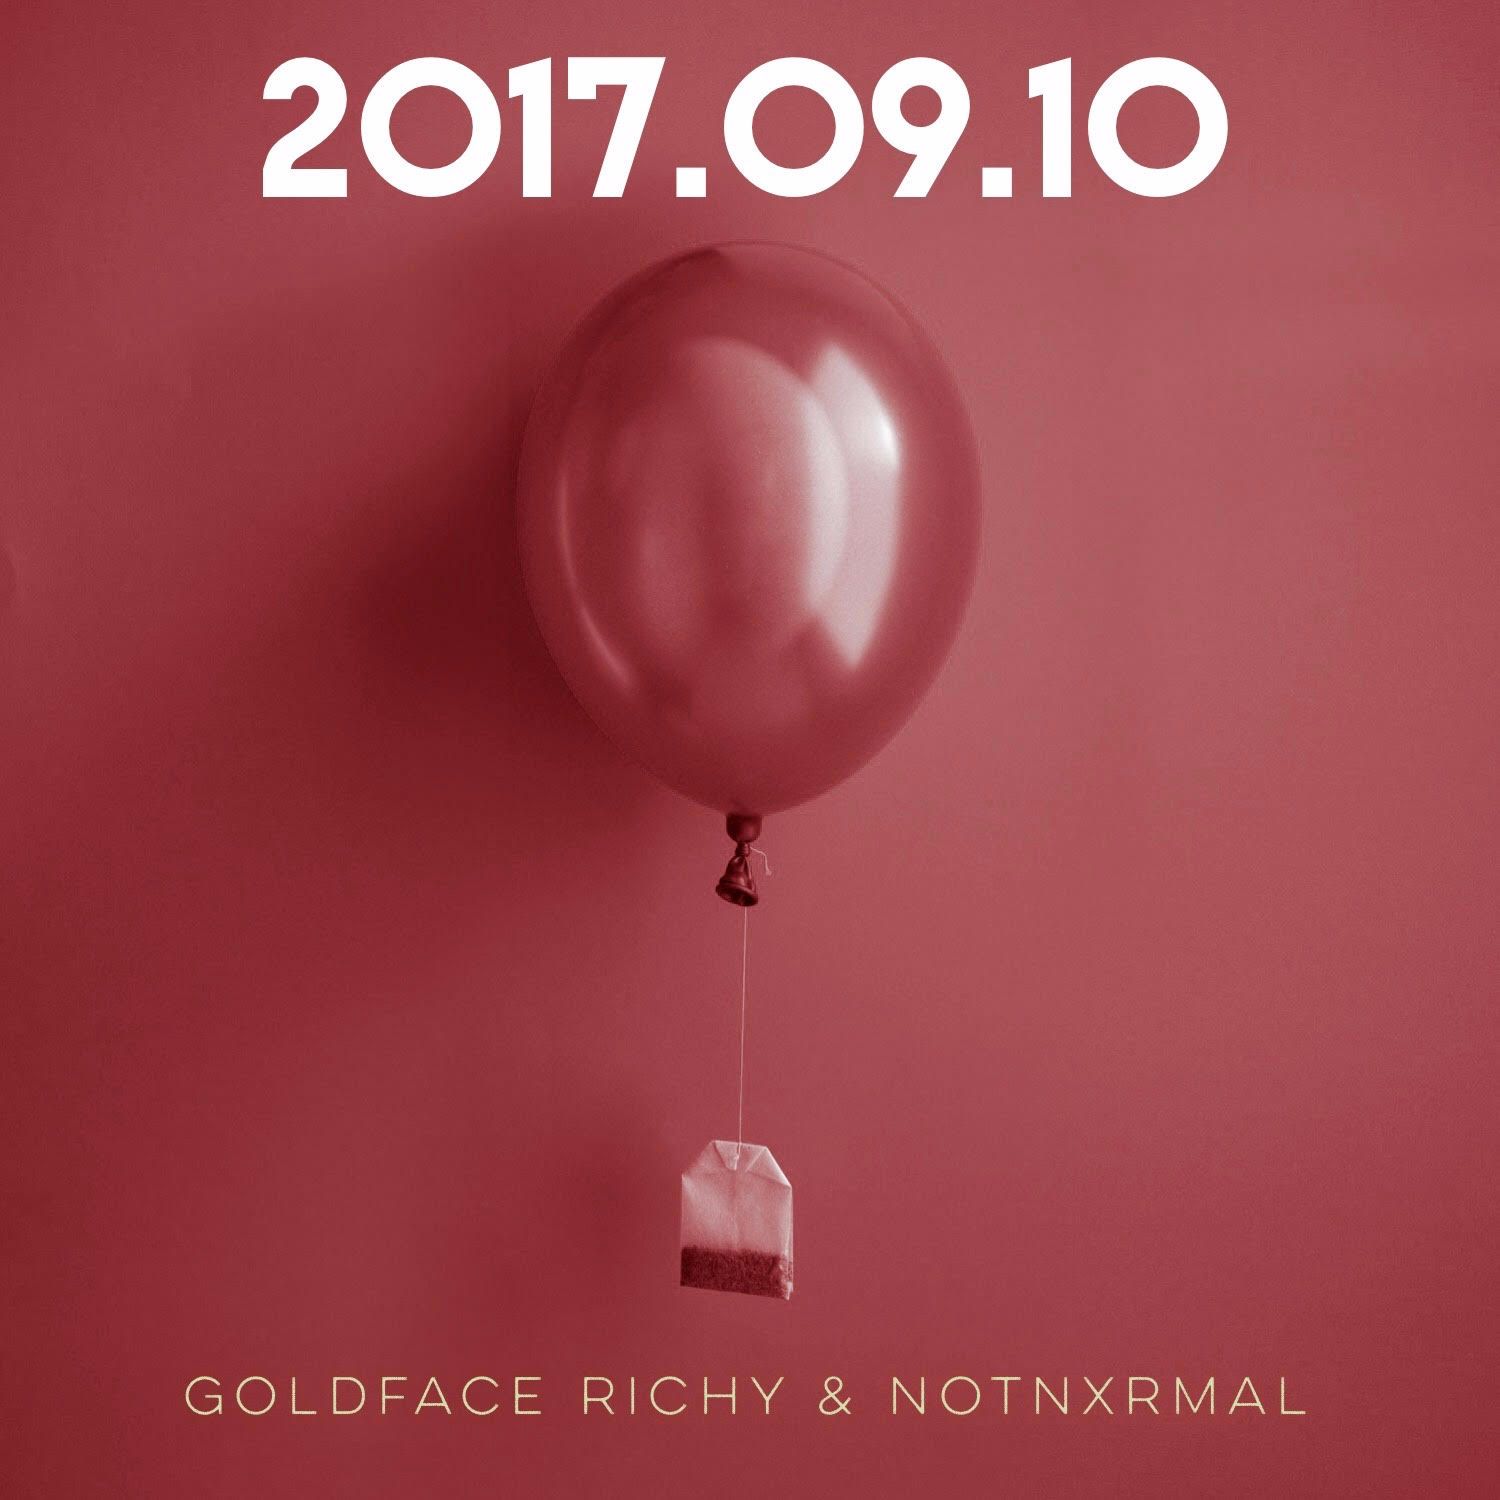 GoldFace Richy & NotNxrmal – “2017.09.10”